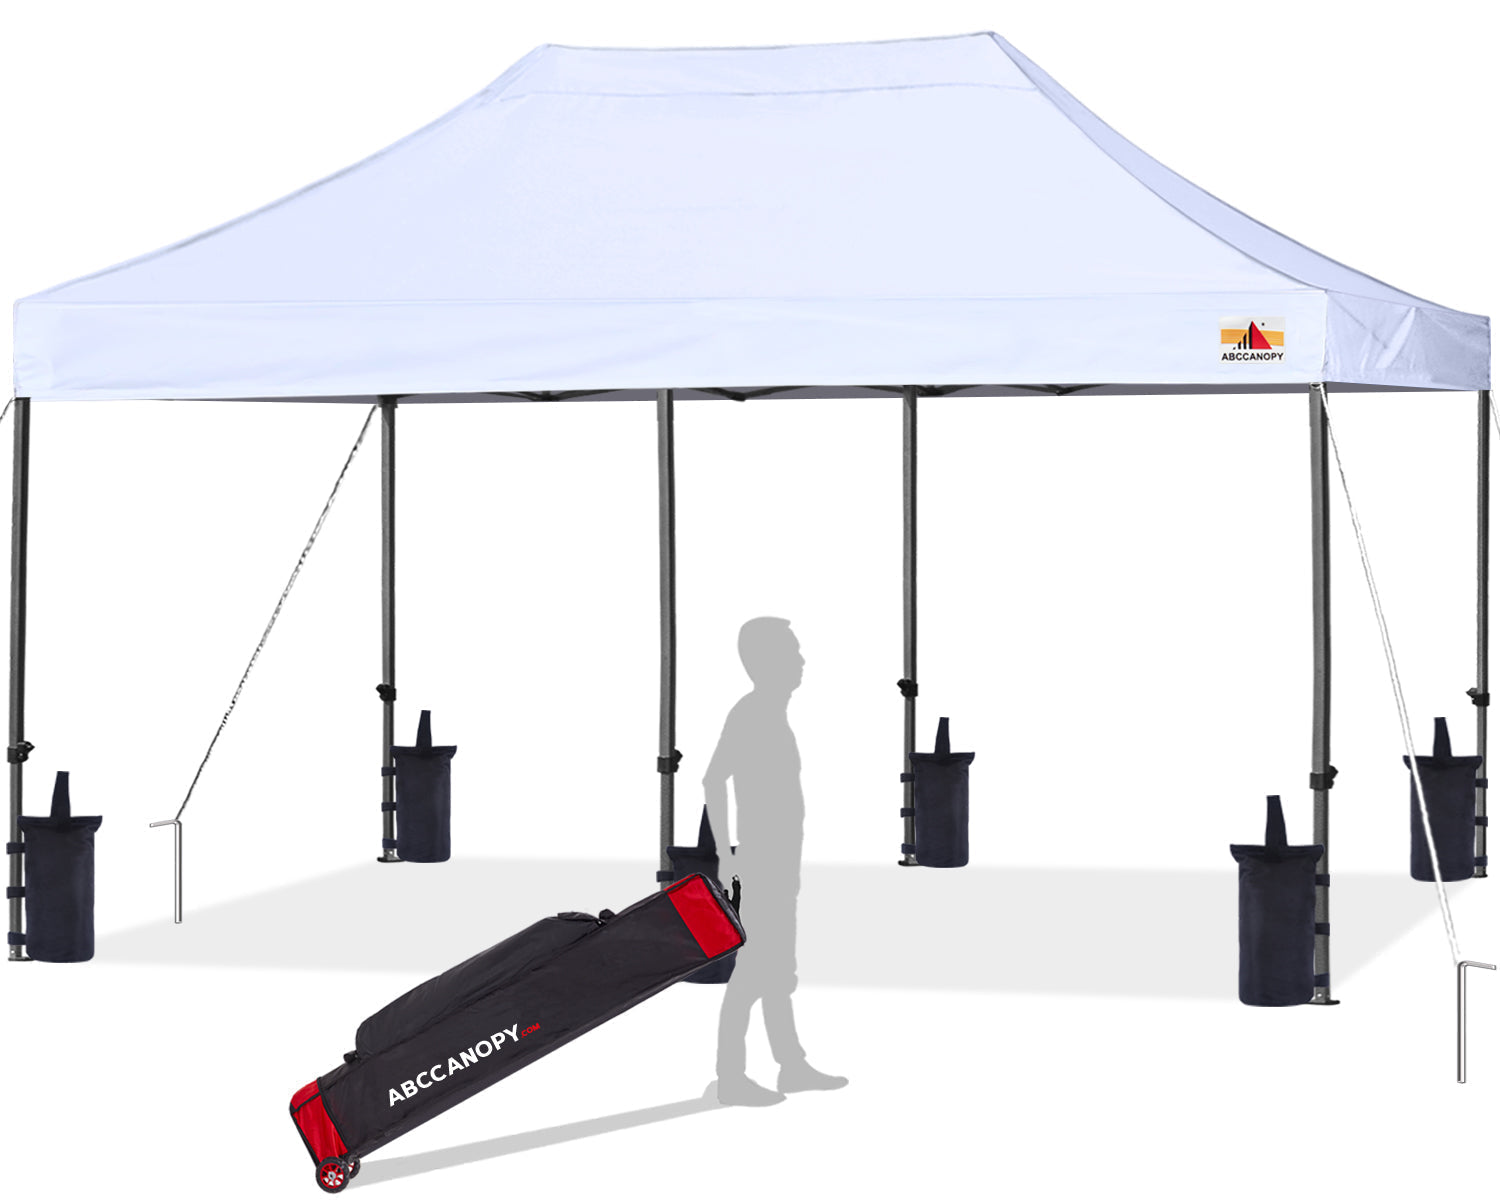 Pop Up Canopy Tent 8x8, 8x12, 8x16 - ABC-CANOPY